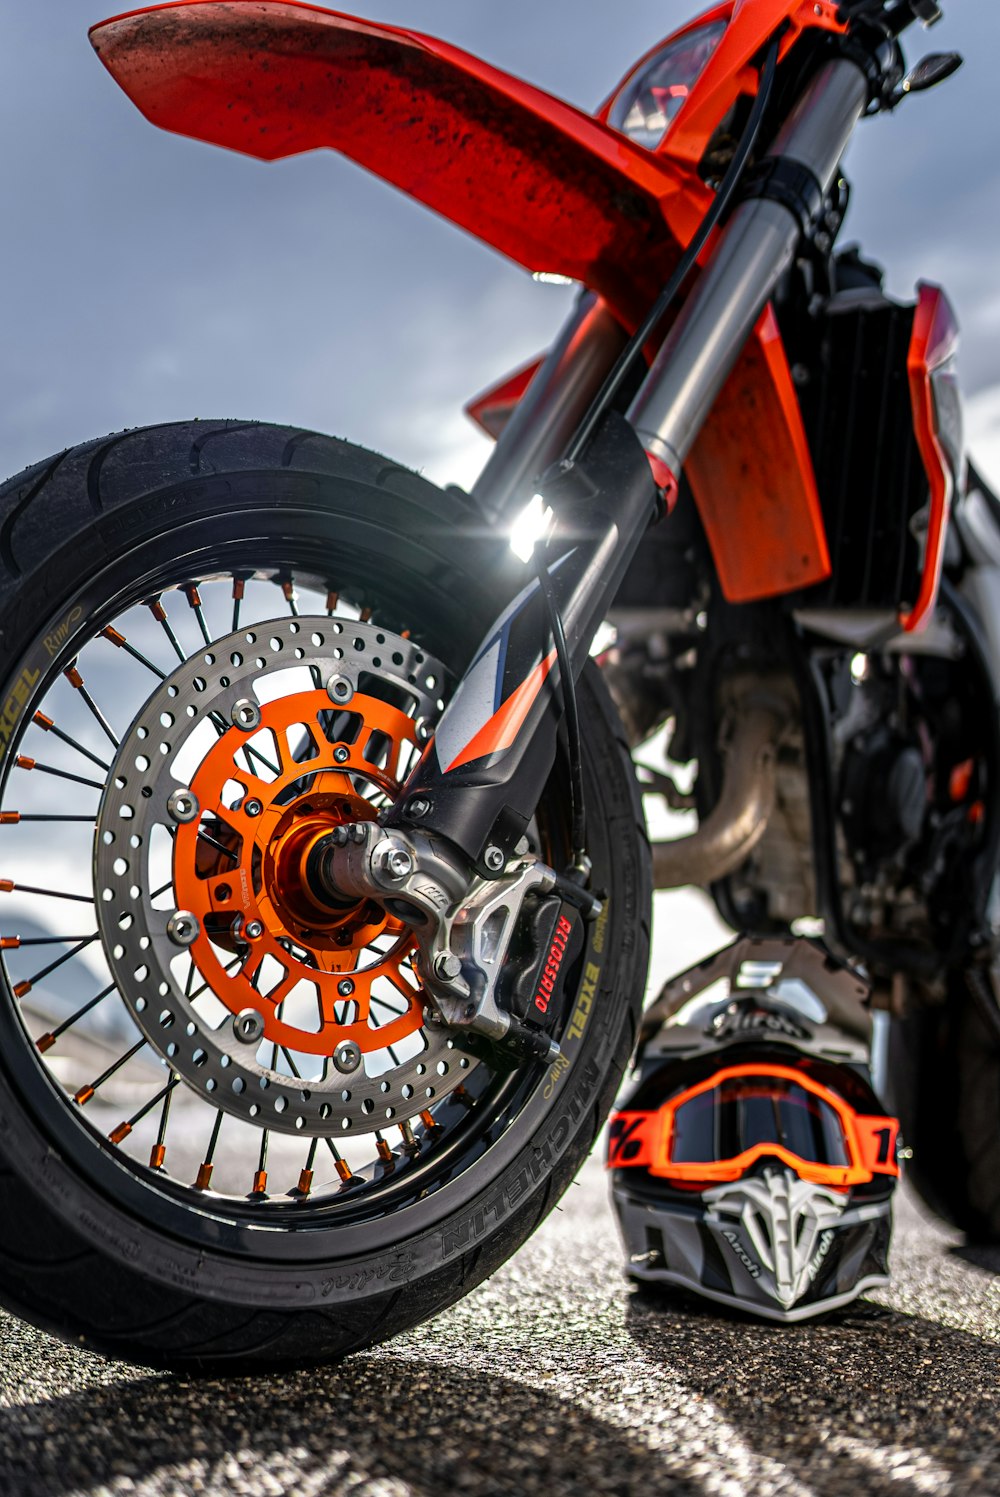 Foto Motocicleta negra y naranja en fotografía de primer plano – Imagen  Motocicleta gratis en Unsplash